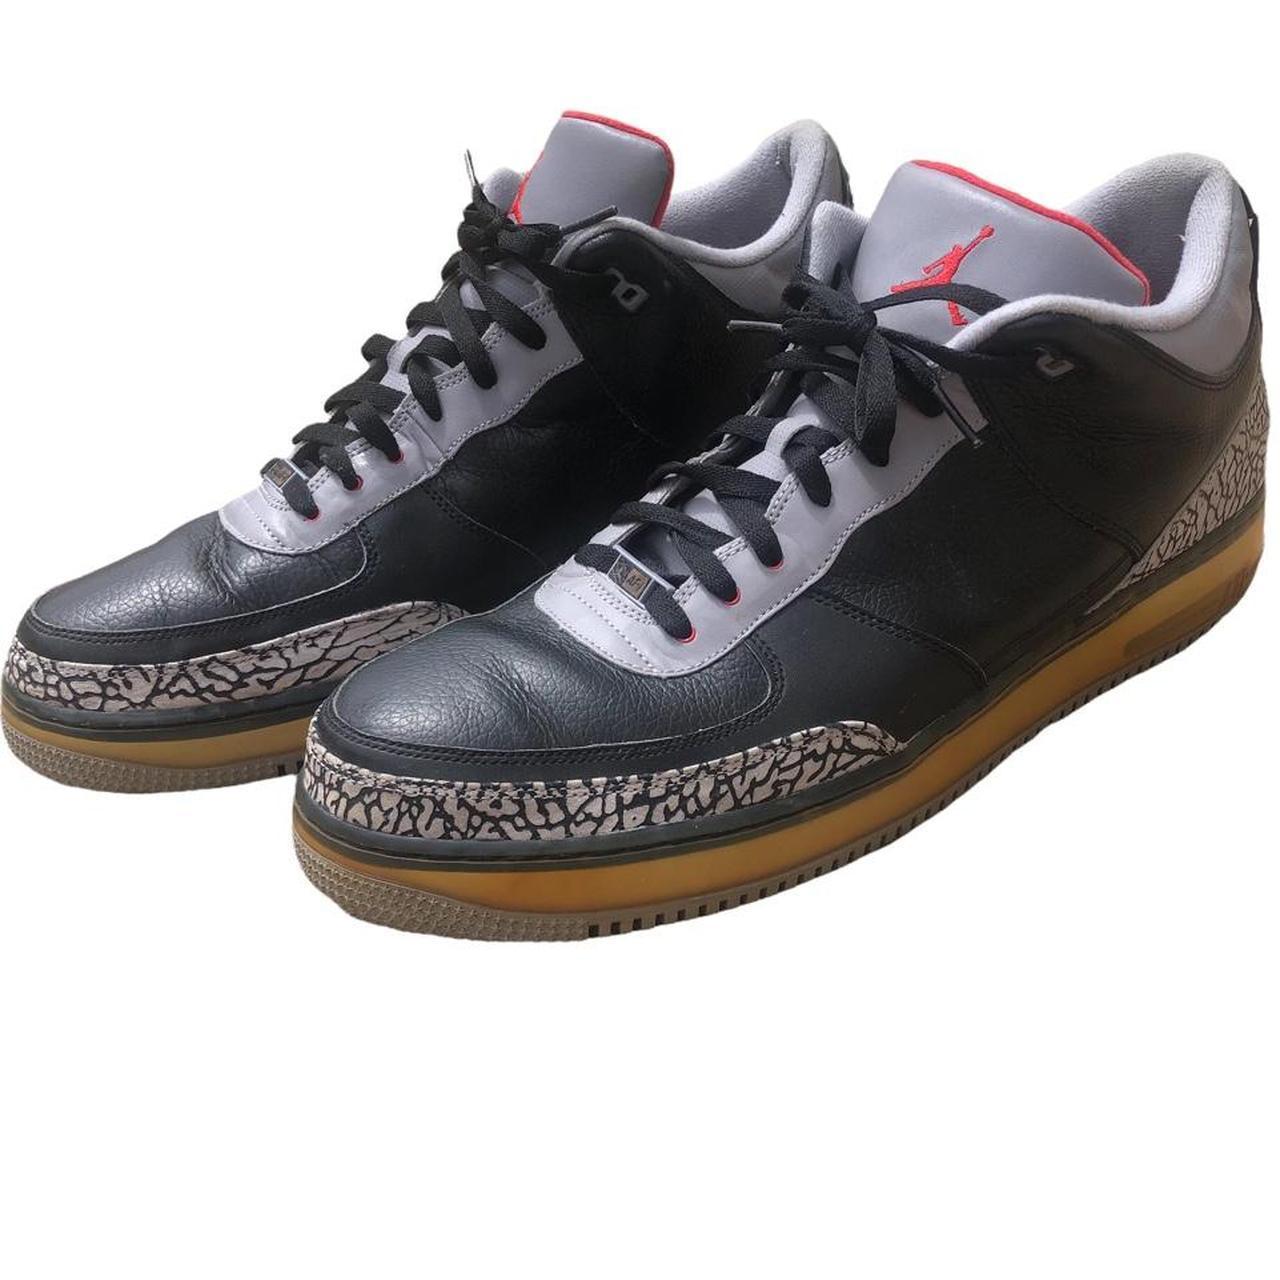 Nike air force 1 Jordan fusion black cement 3